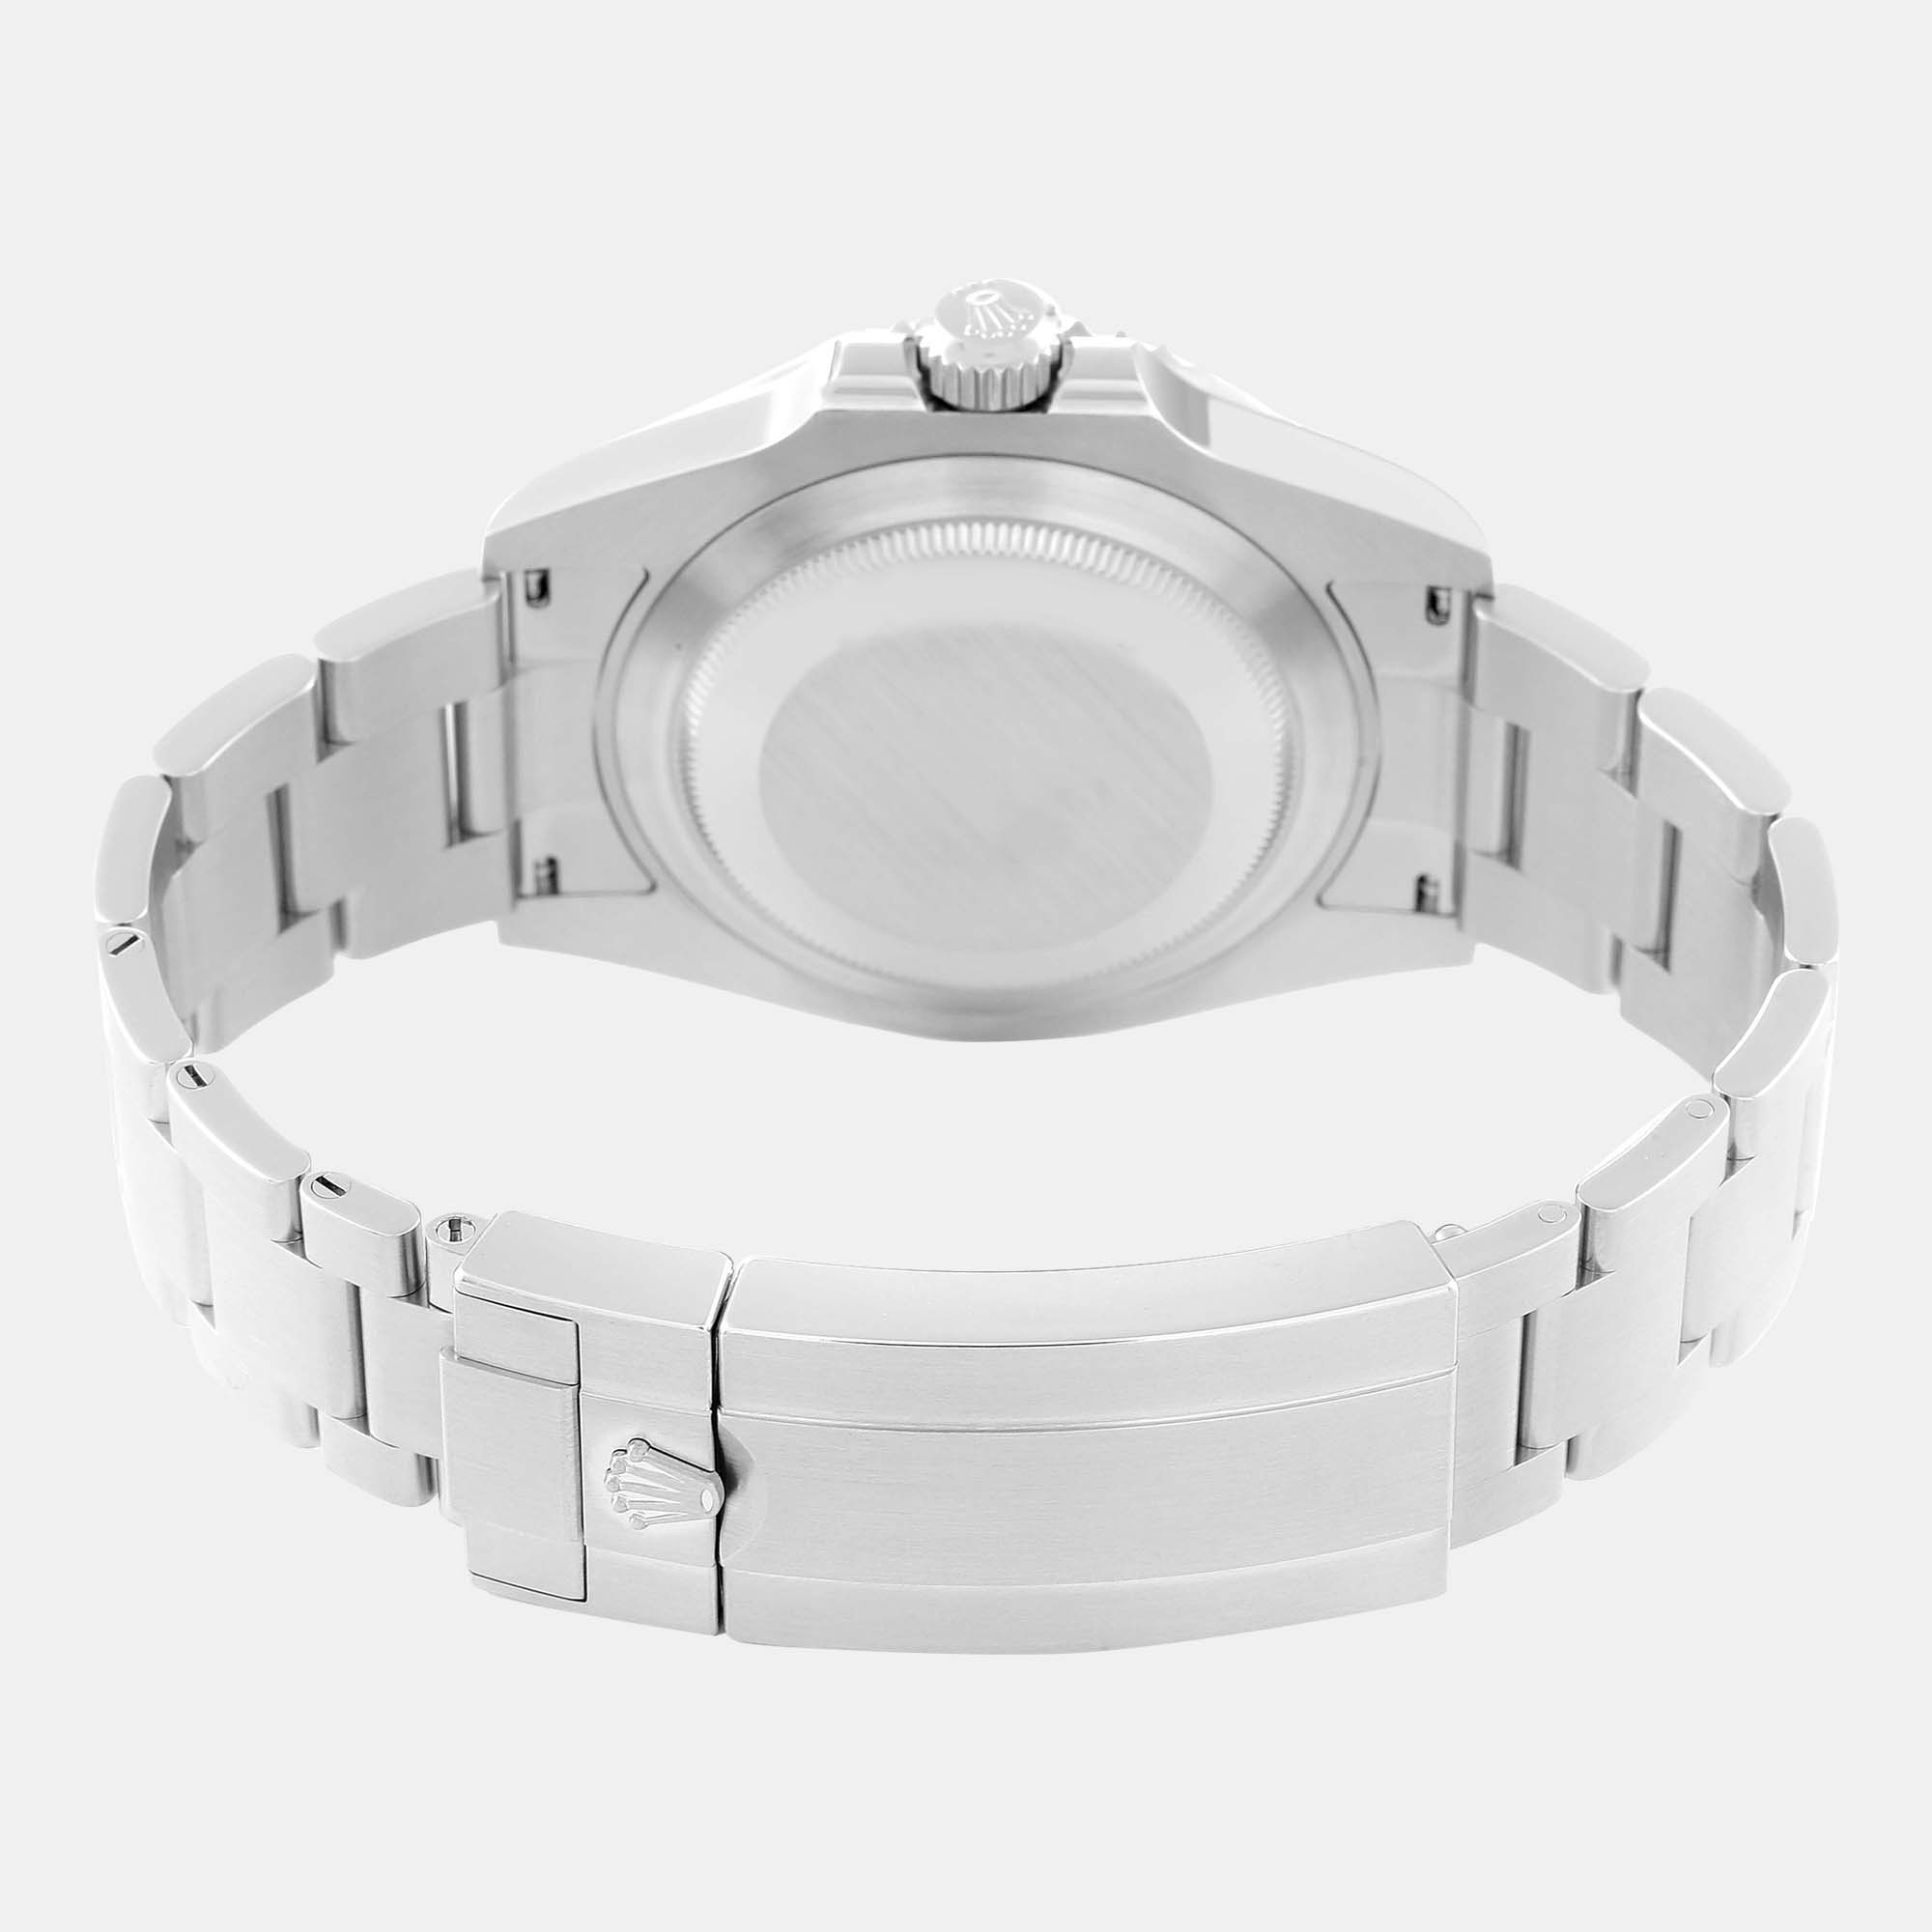 Rolex Submariner Non-Date 4 Liner Ceramic Bezel Steel Mens Watch 124060 41 Mm